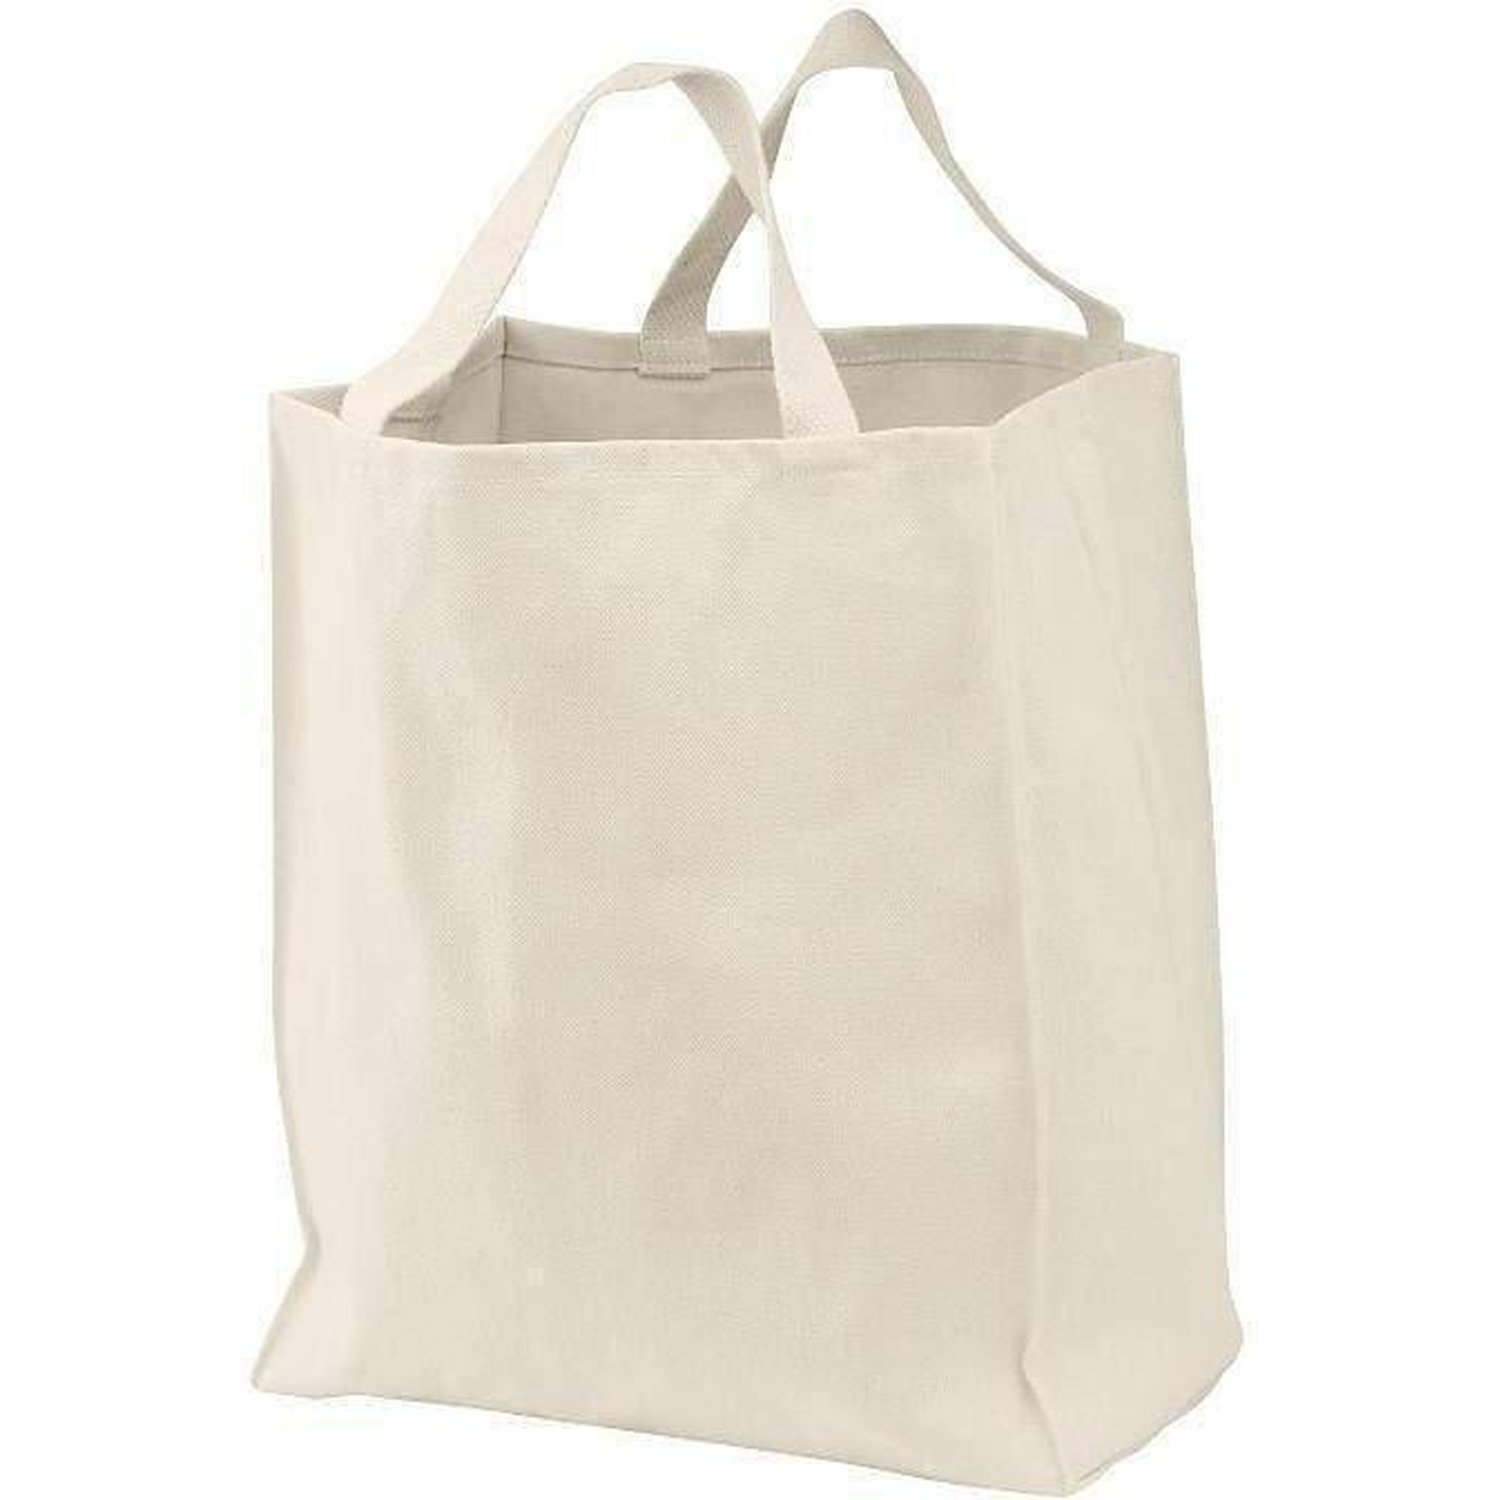 Buy Cozy Plush Tote - Order Bags online 1122580200 - Victoria's Secret US